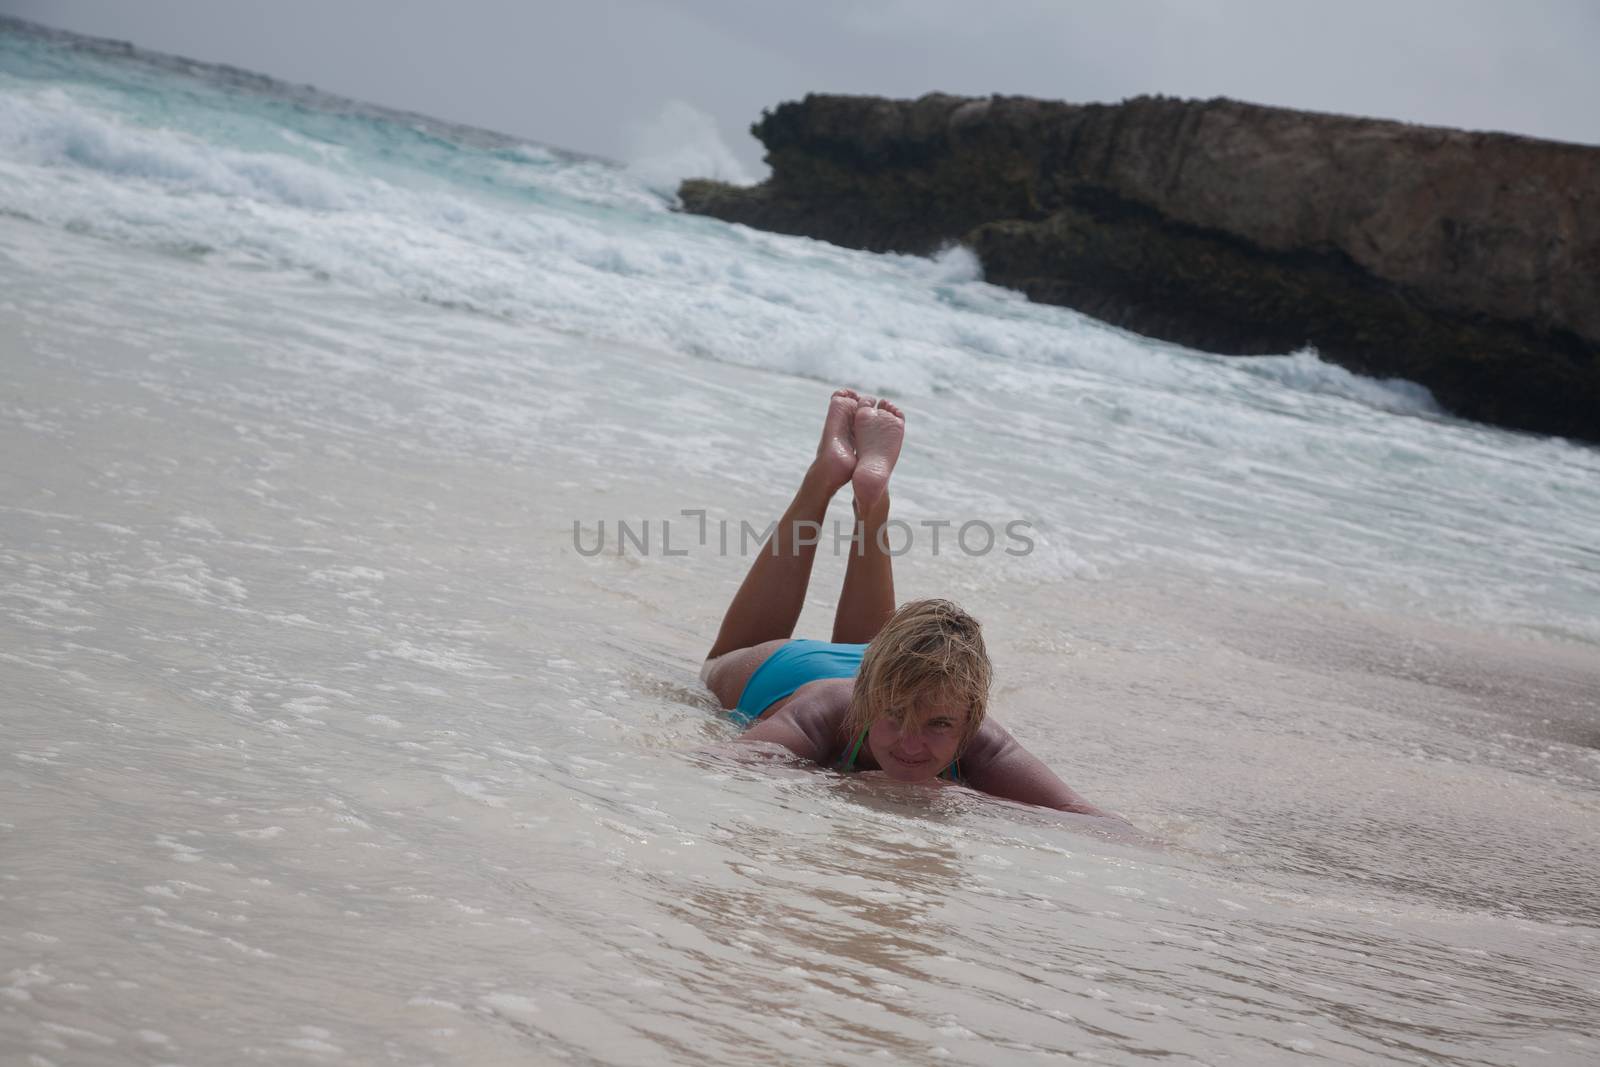 bikini Girl caribbean Sea beach by desant7474